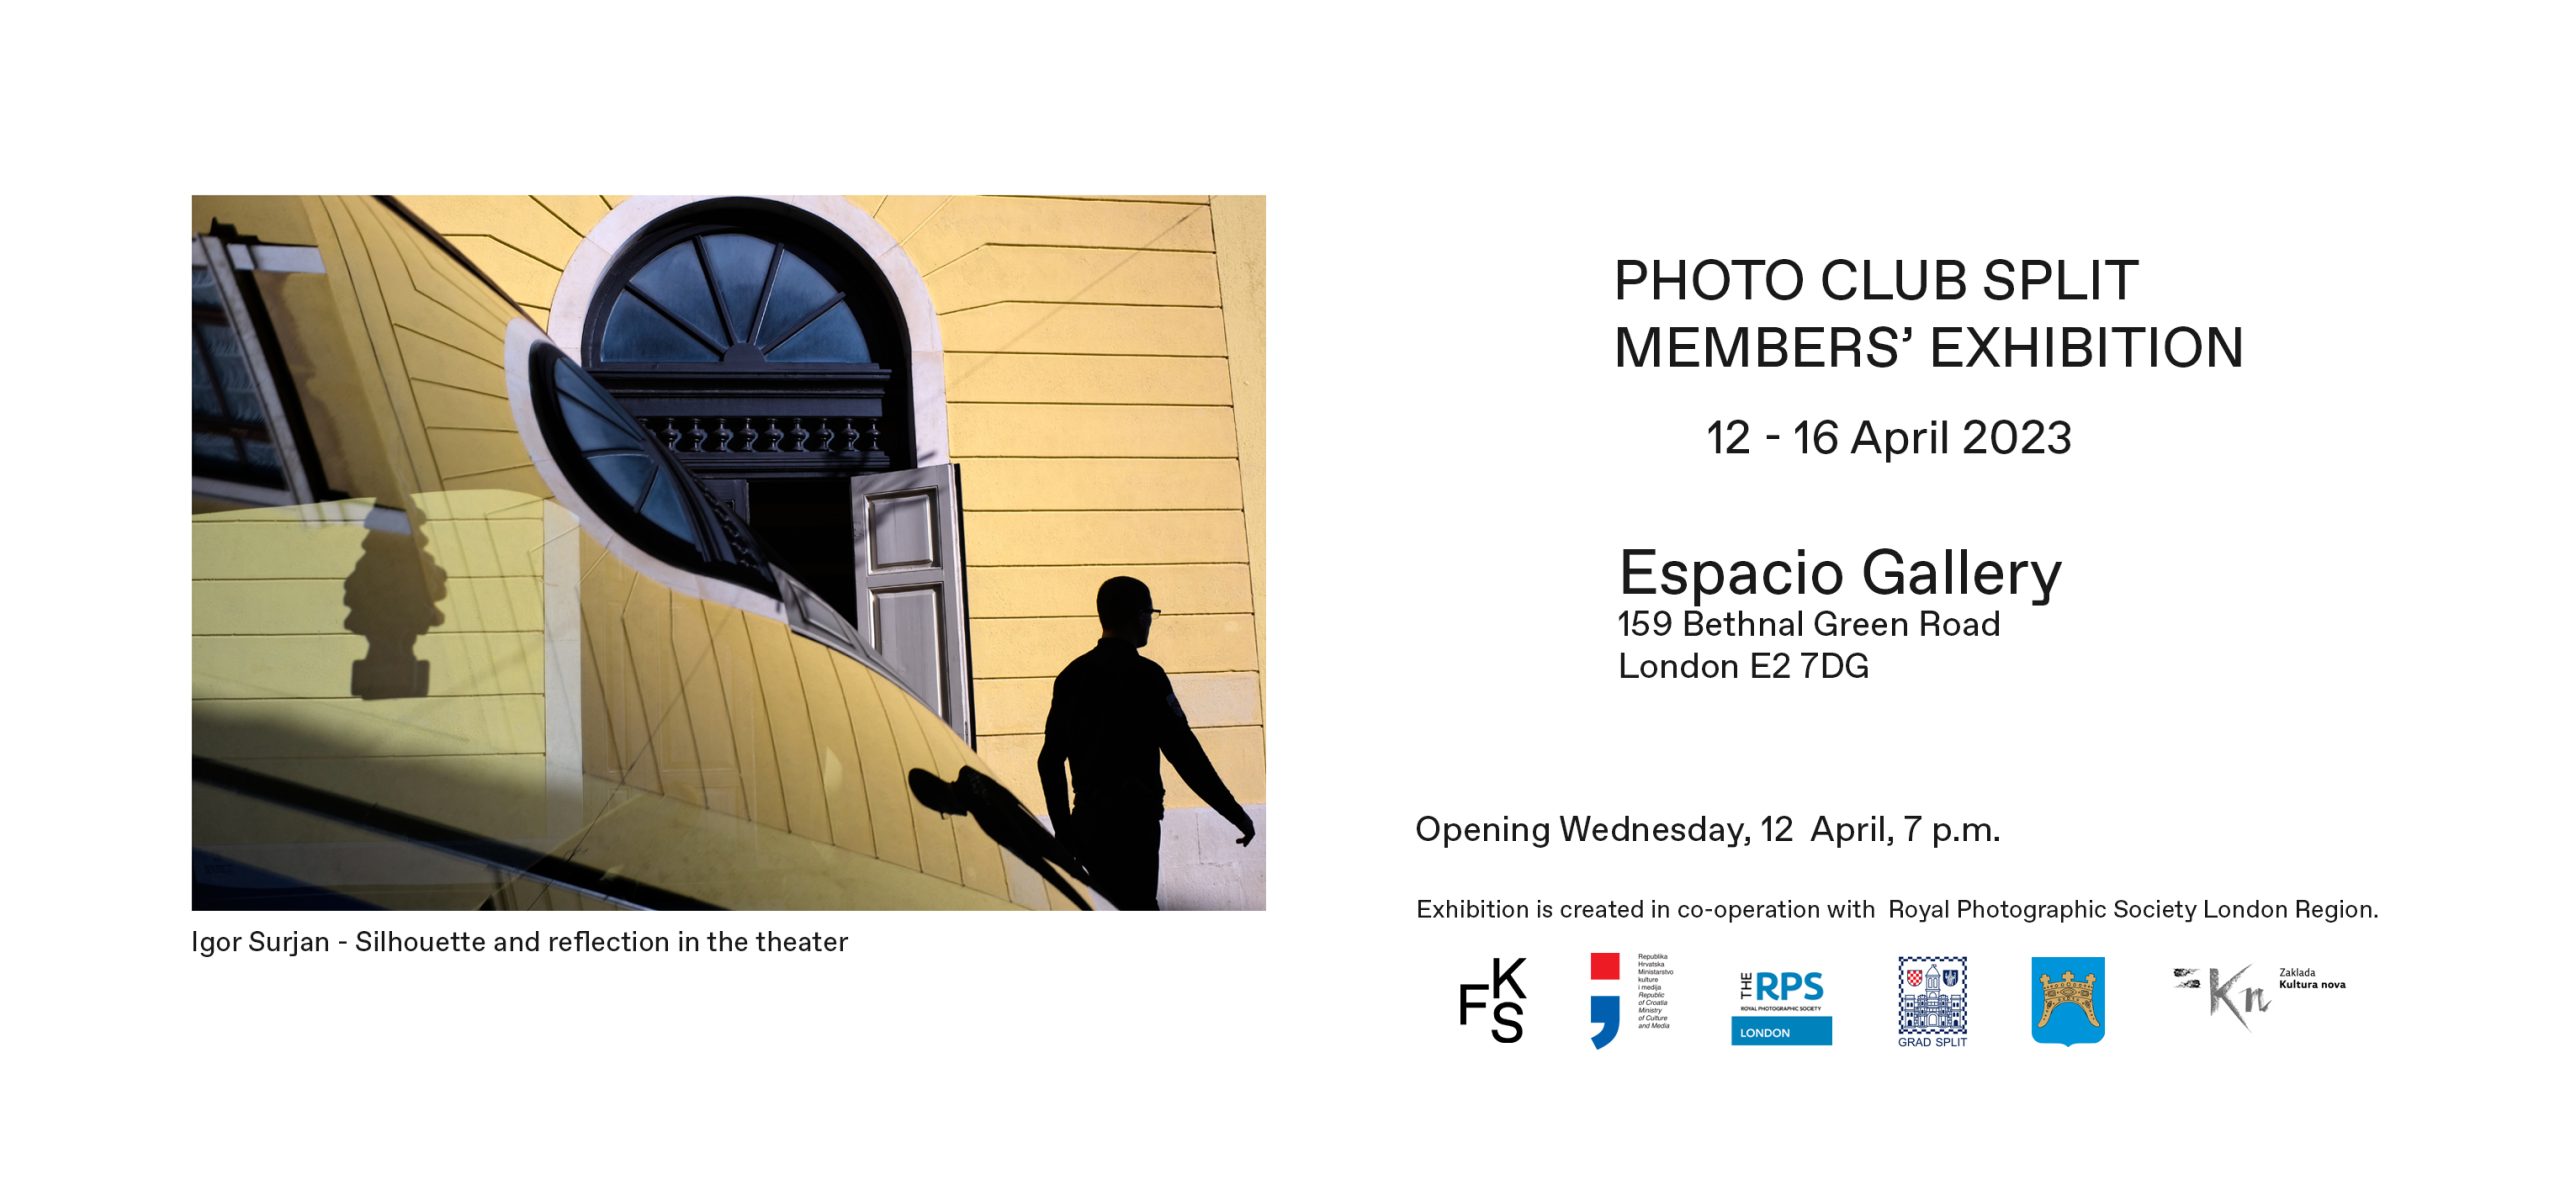 Izložba članova Fotokluba Split otvara se u Londonu